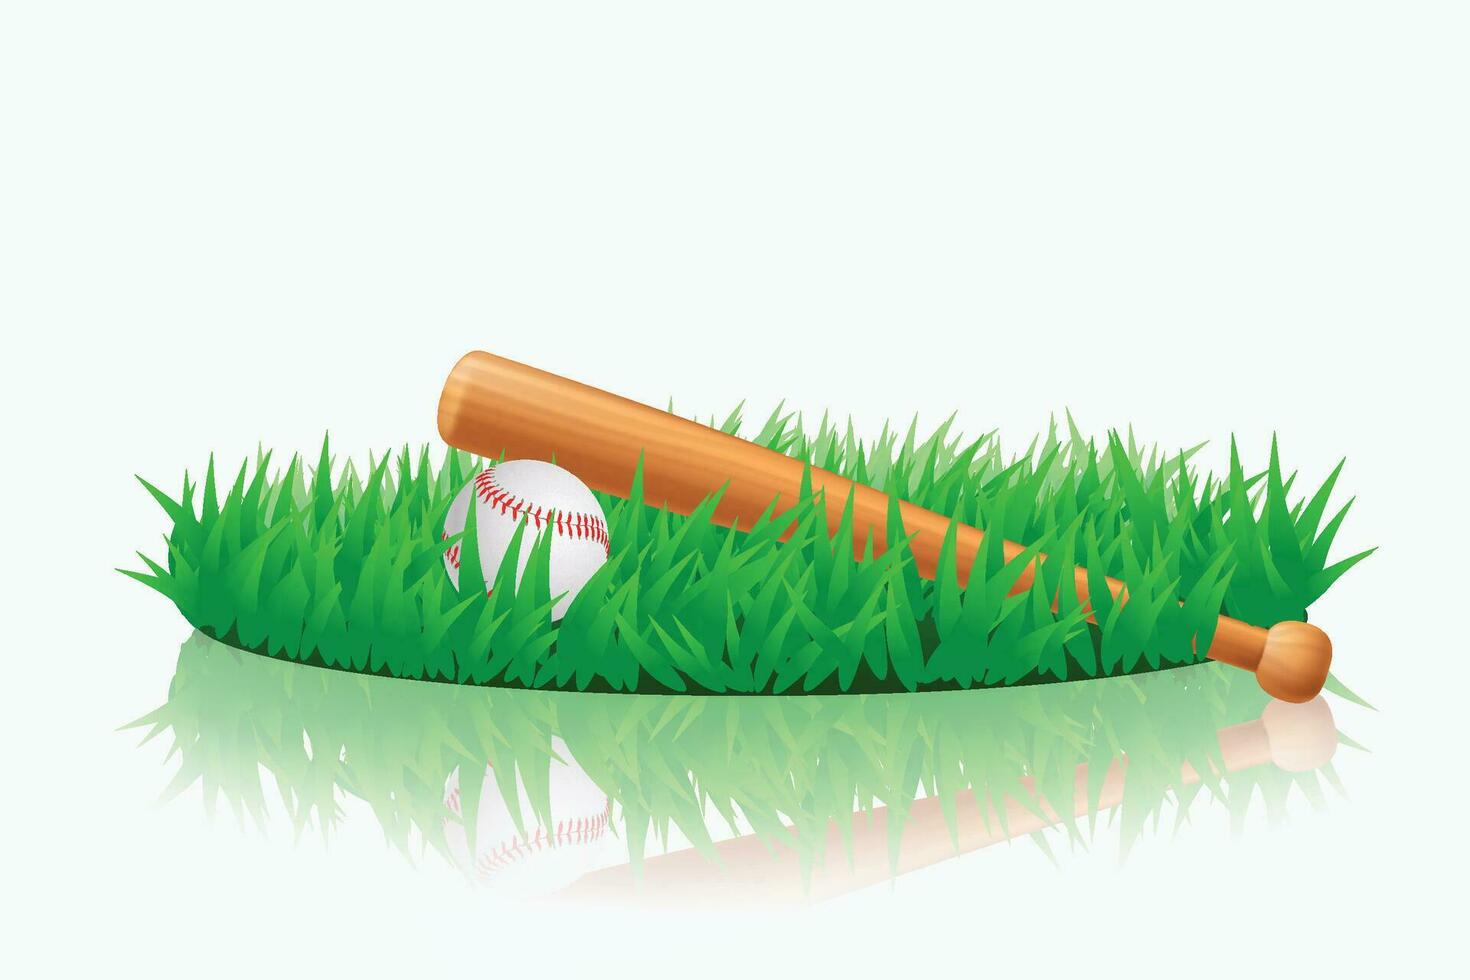 baseball equipment on grass vector